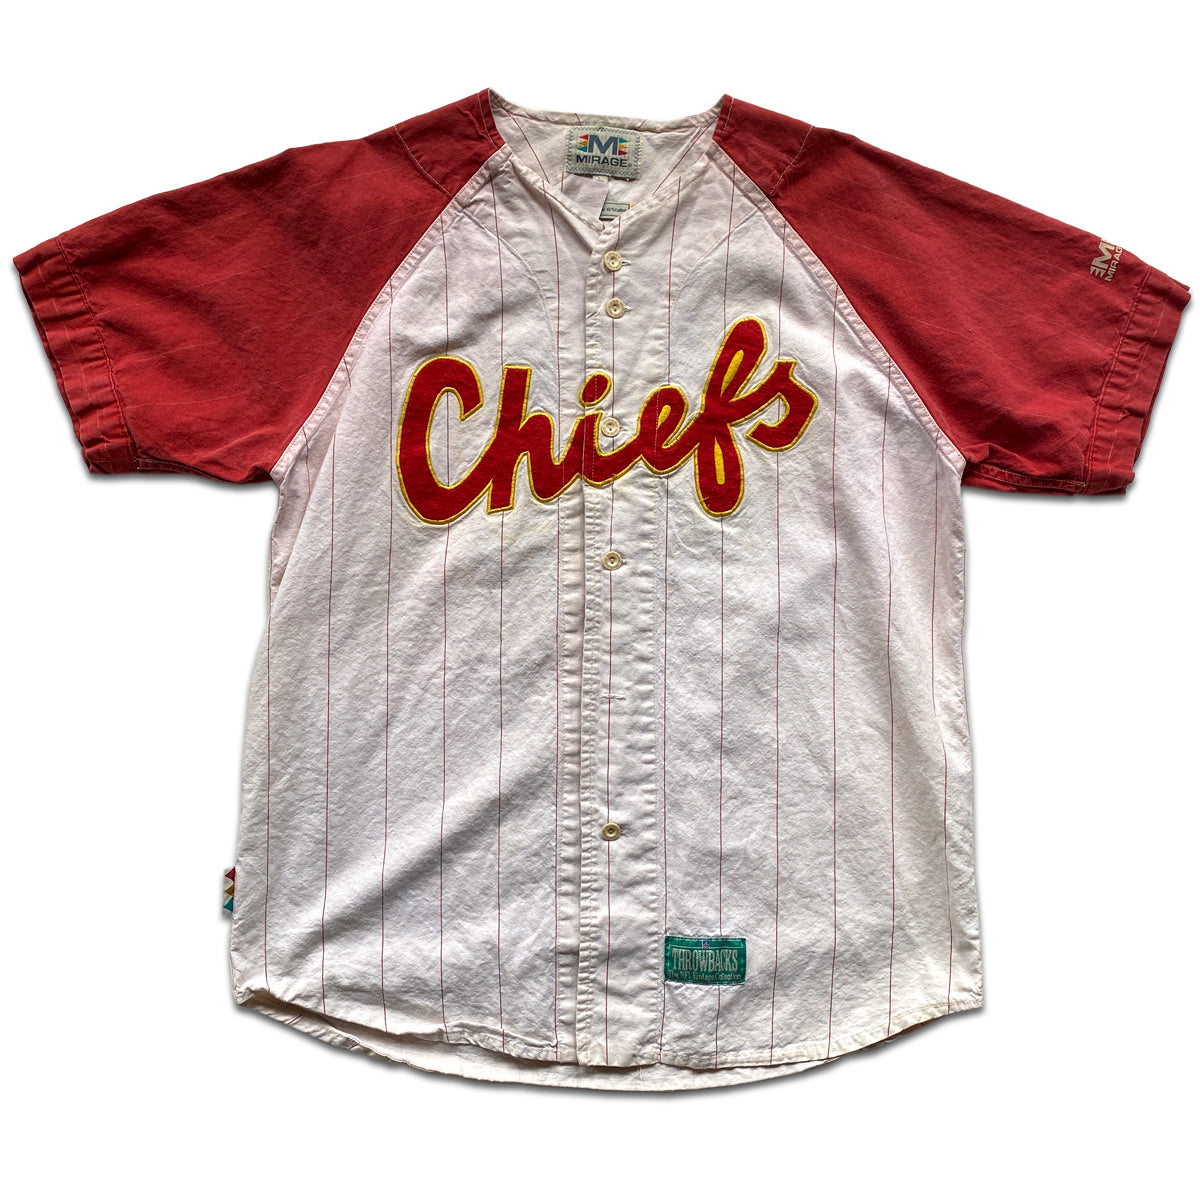 chiefs baseball jersey